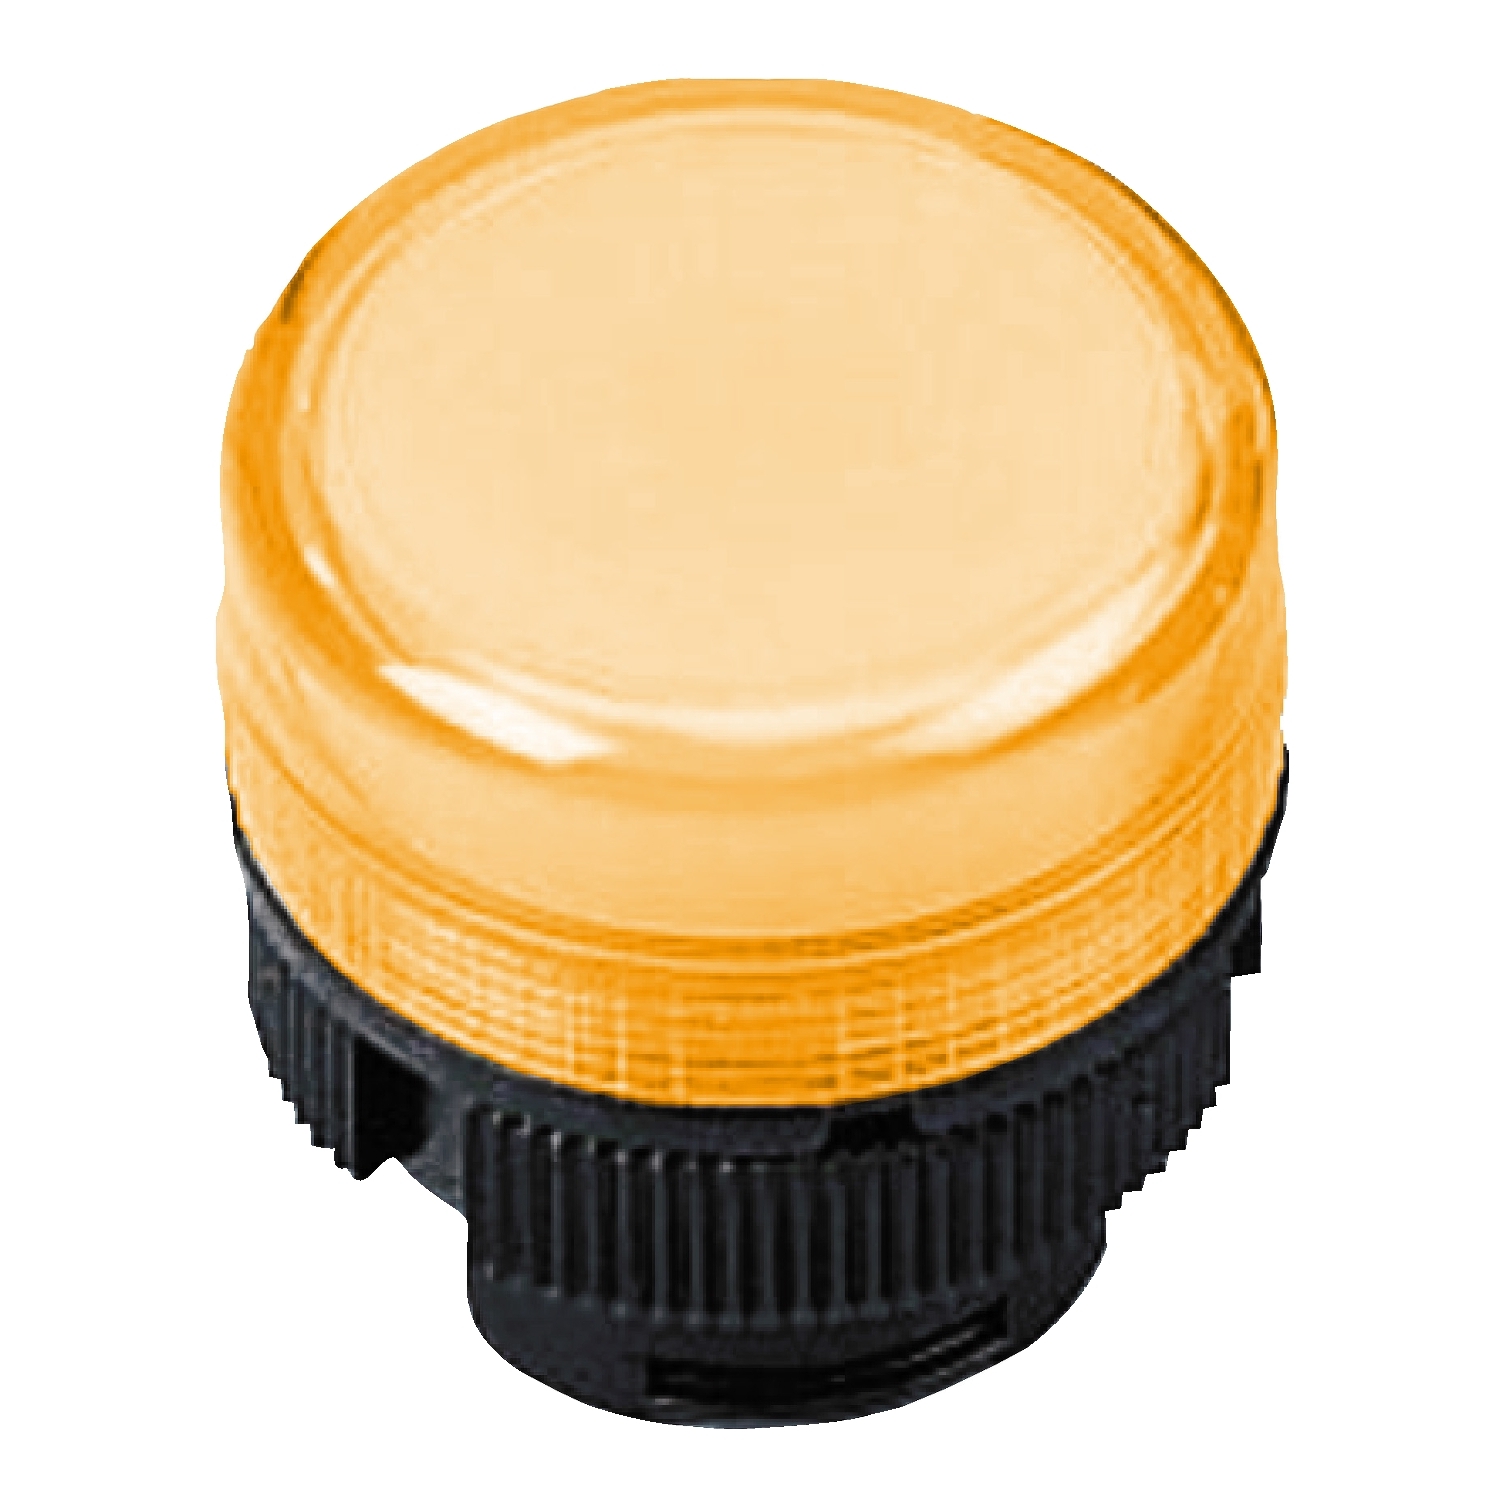 Head for pilot light, Harmony XAC, for incandescent bulb, plastic, yellow cap, 22mm